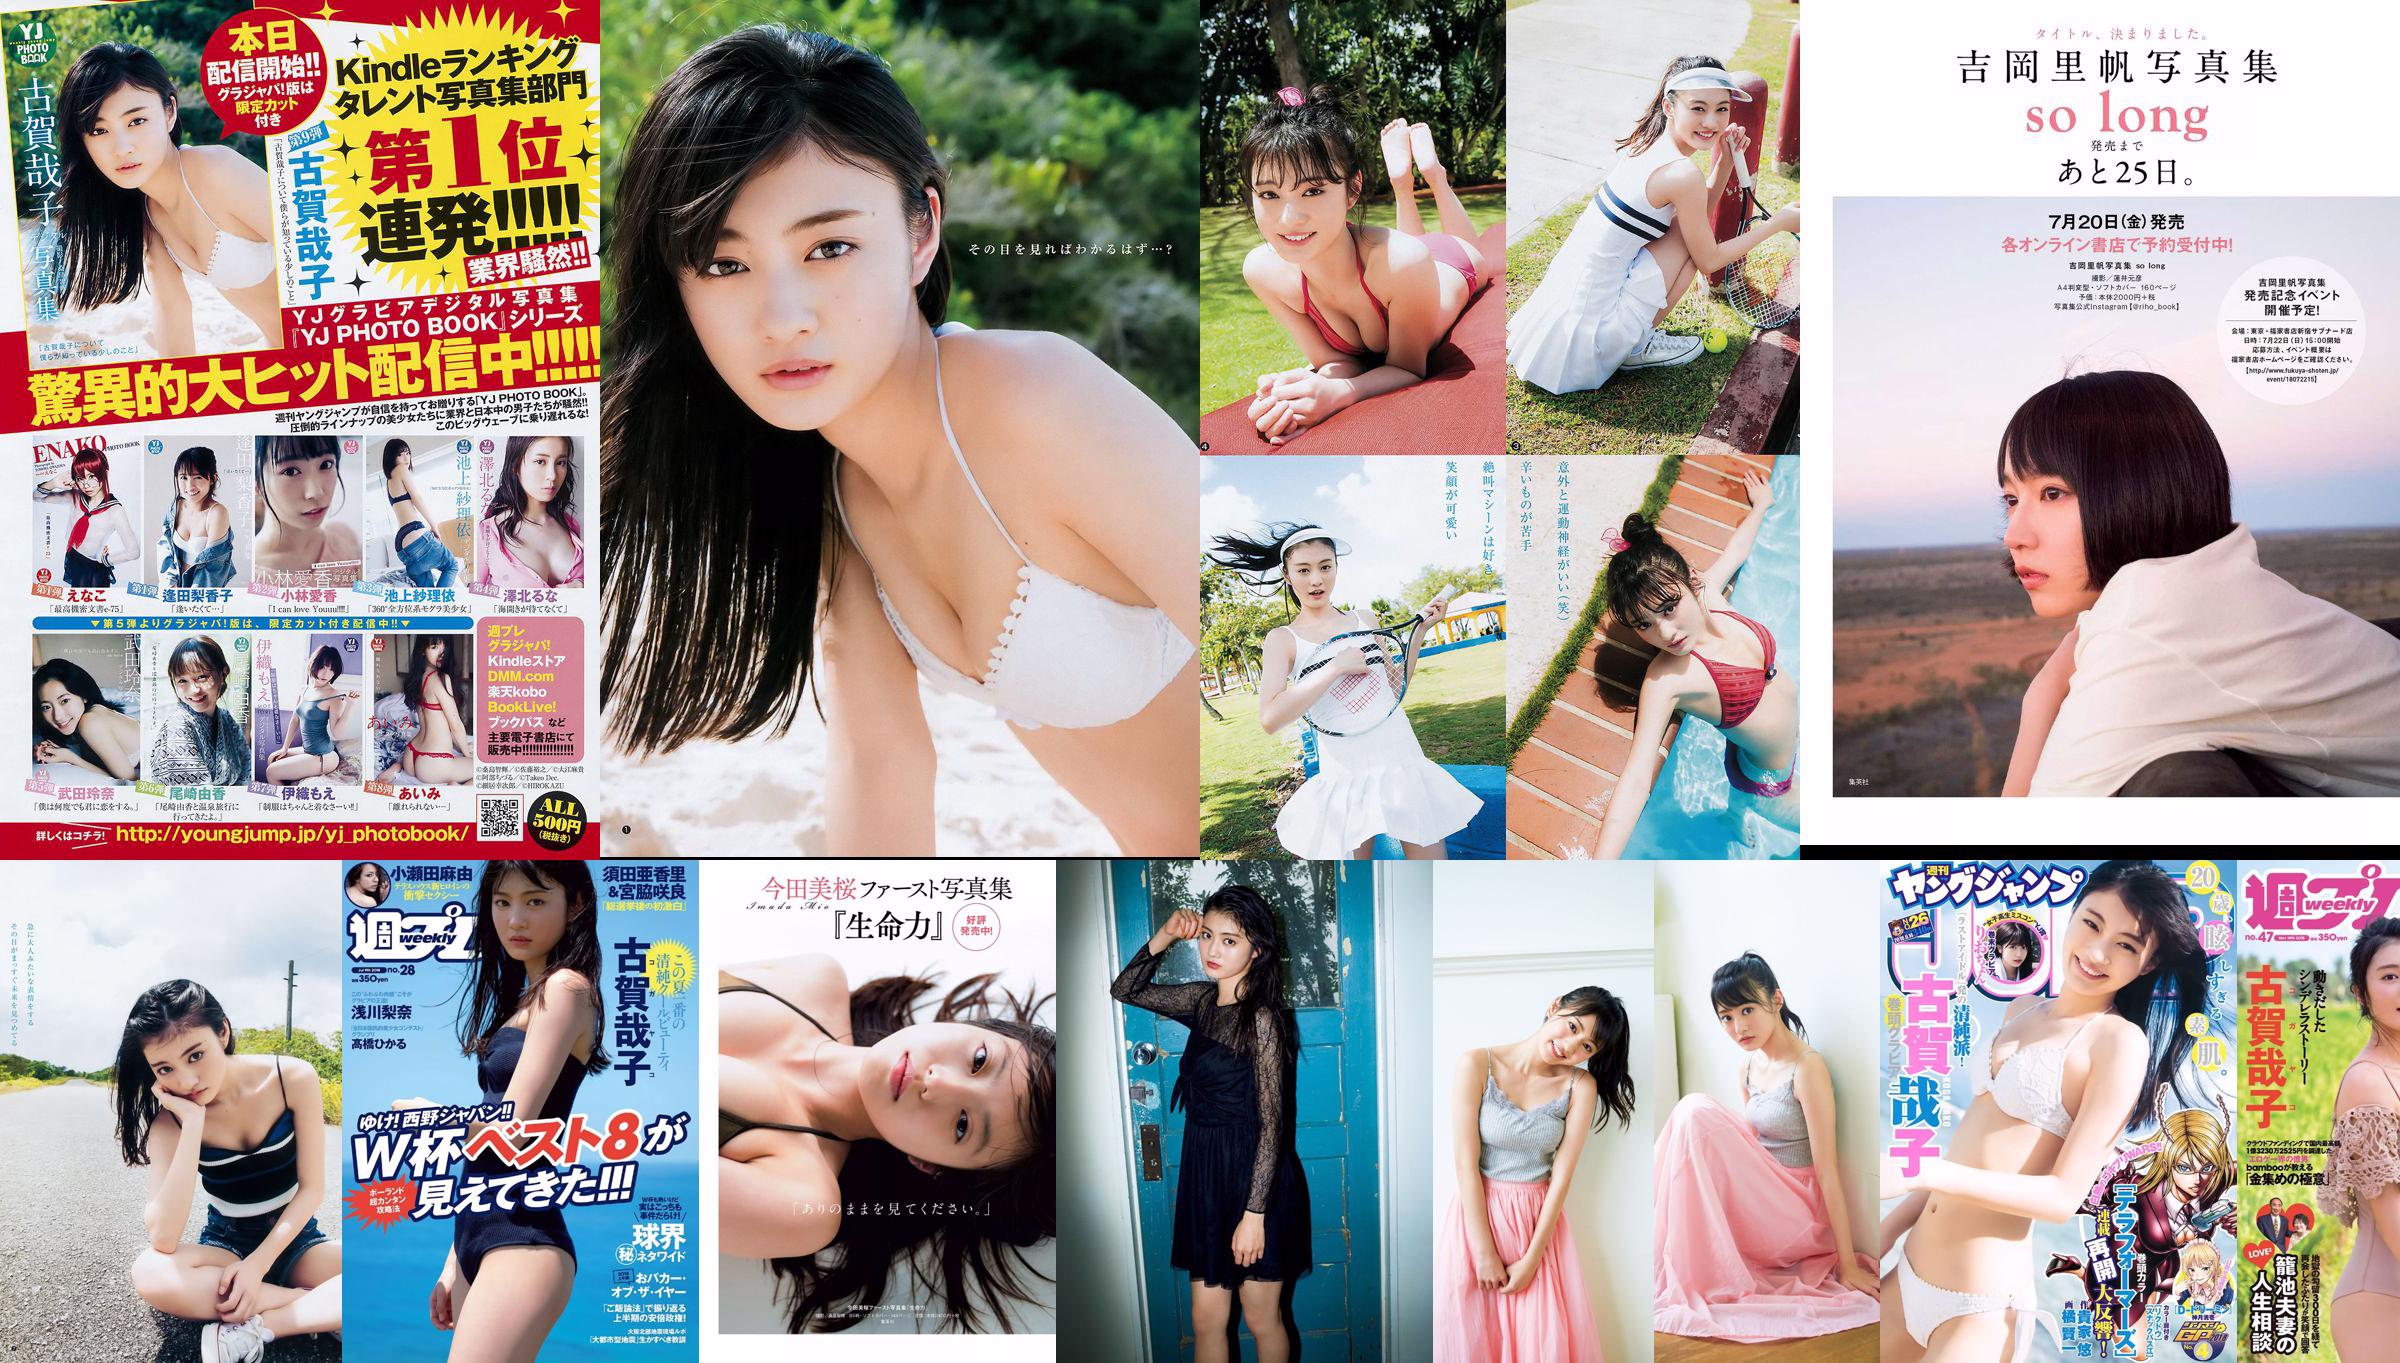 Yoshiko Koga Riochon [Wekelijkse Young Jump] nr. 26 fotomagazine in 2018 No.8fc897 Pagina 2